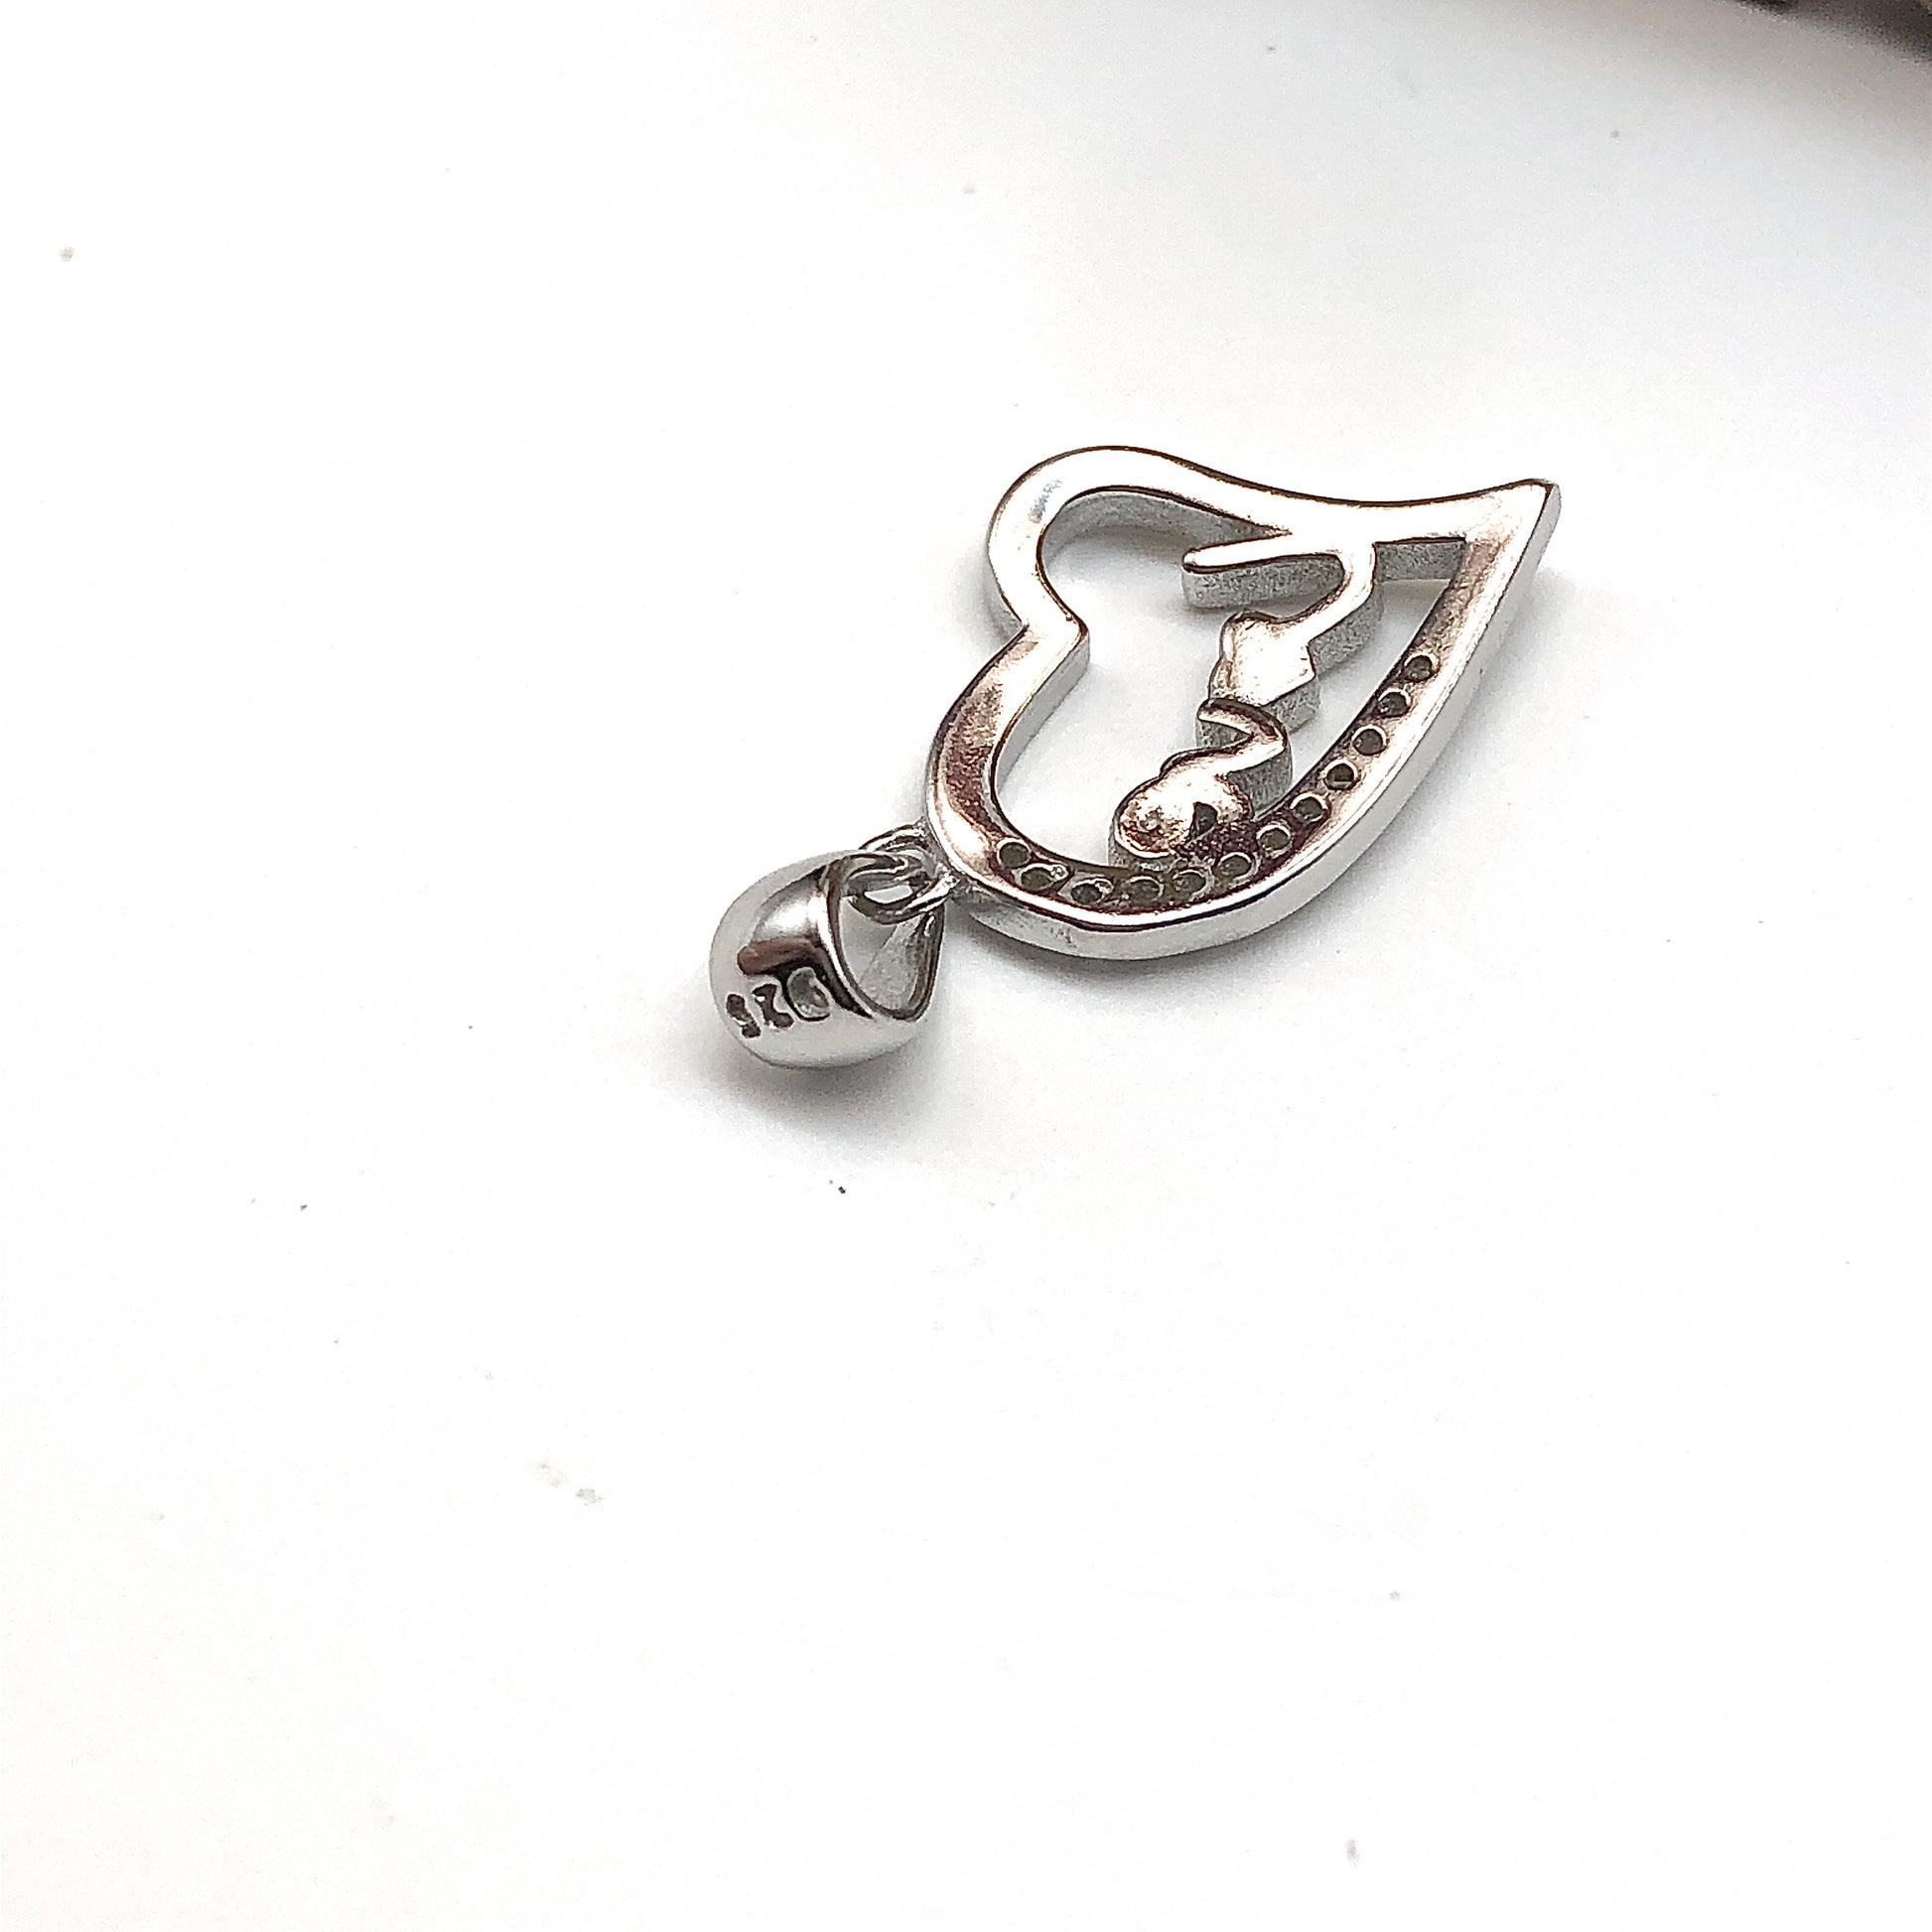 Blingschlingers Jewelry - Womens Gift, Sterling Silver LOVE Heart Pendant